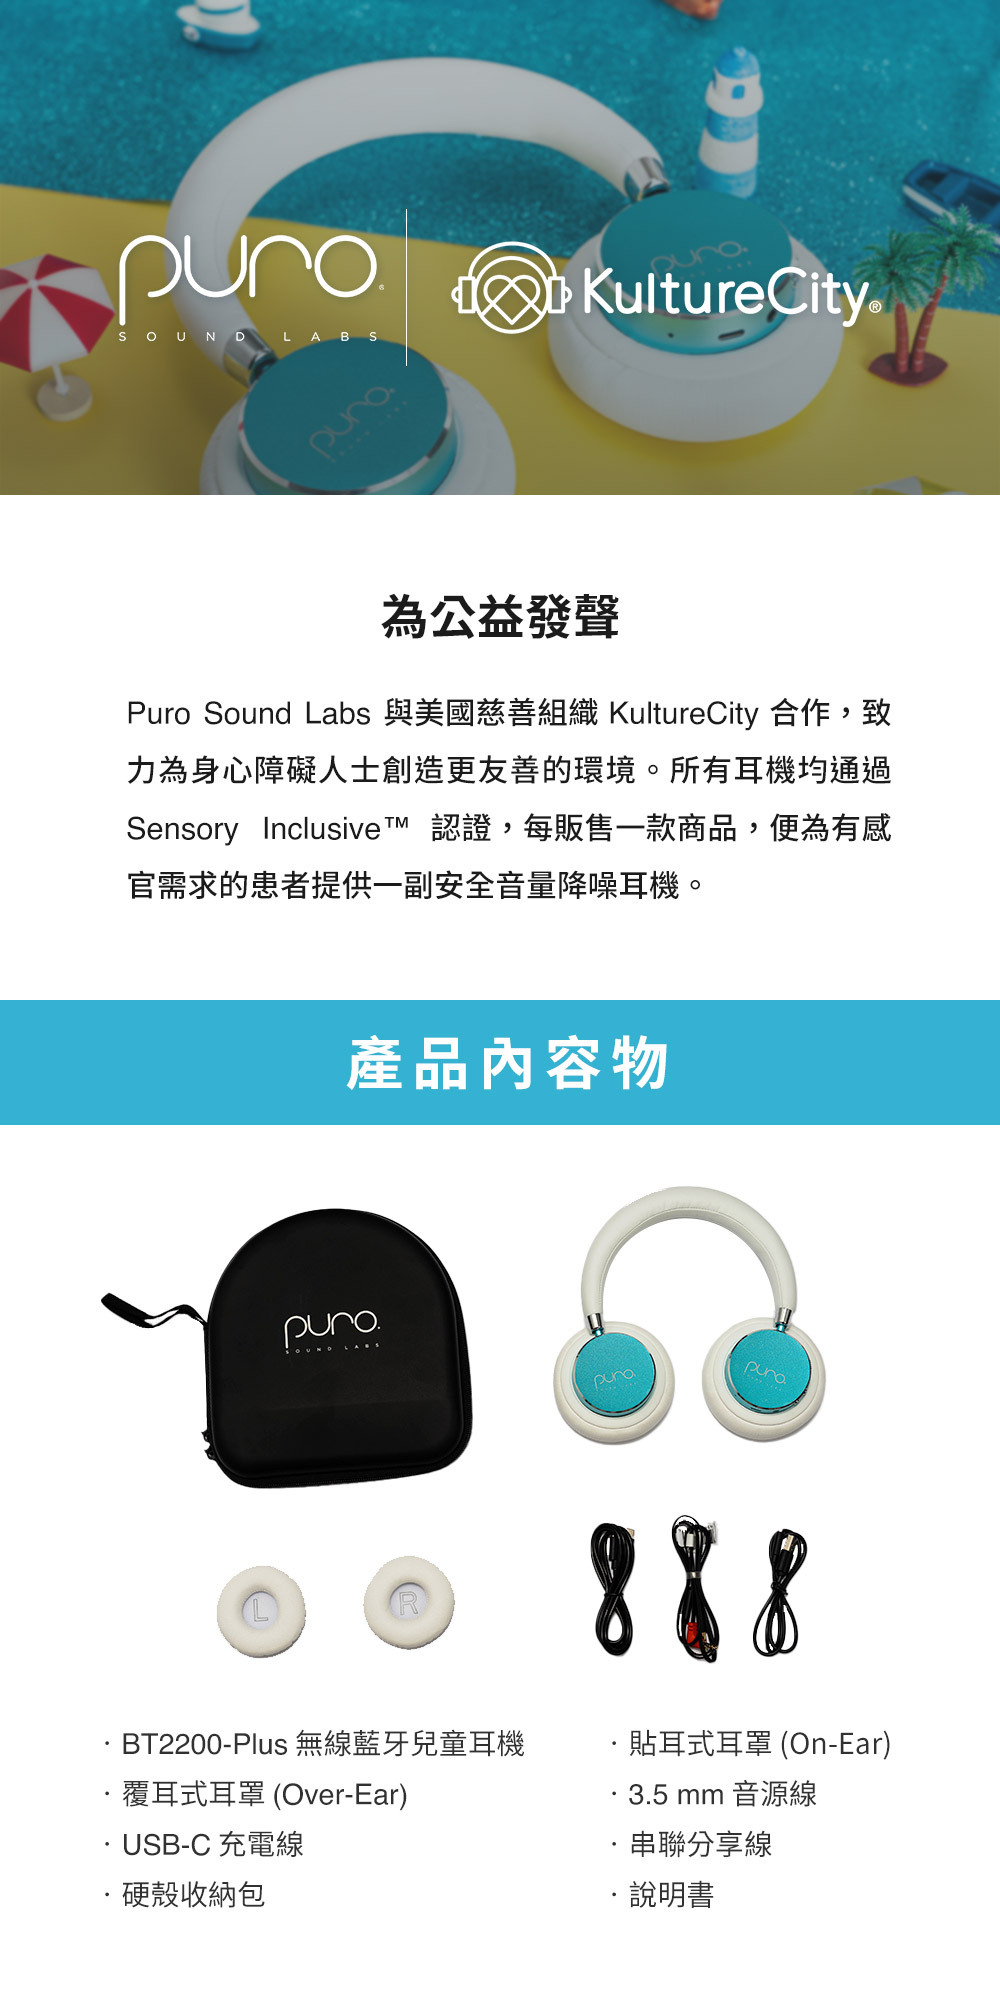 qonPuro Sound Ls PO´ KultureCity X@PO߻êHhгy͵ҡCҦվqLSensory Inclusive {,Cc@ڰӫ~,KPxݨDw̴Ѥ@ƦwqվCab KultureCity~eRBT2200-Plus LuŤൣվЦզոn (Over-Ear)USB-C Rquwߦǥ].PKզոn (On-Ear).3.5 mm upɽu